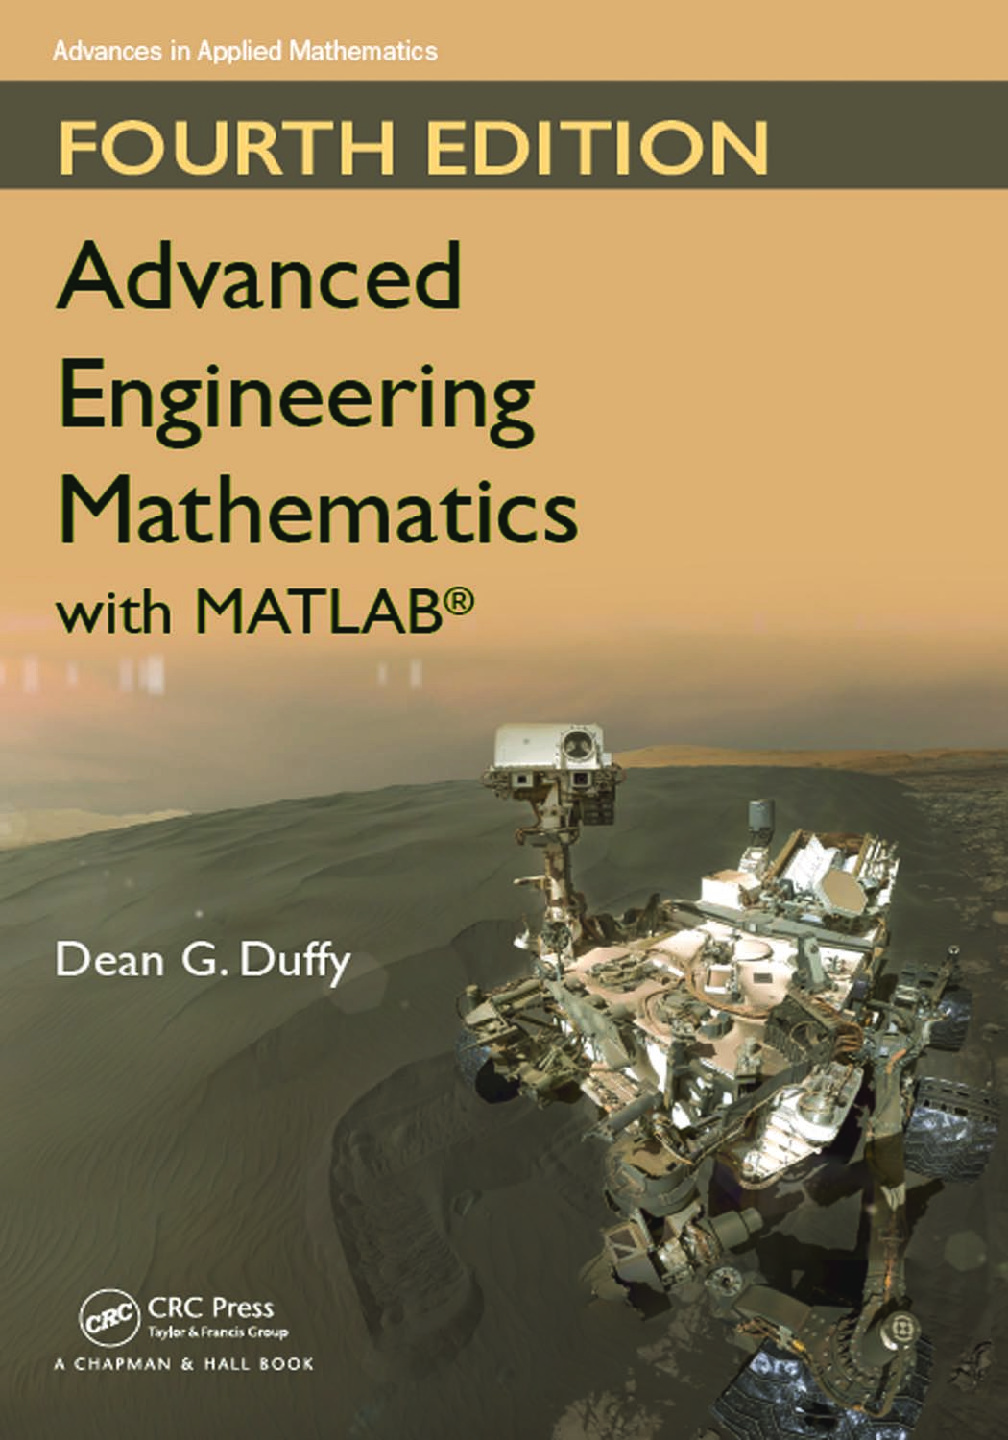 Advanced engineering mathematics with MATLAB (Dean G. Duffy)